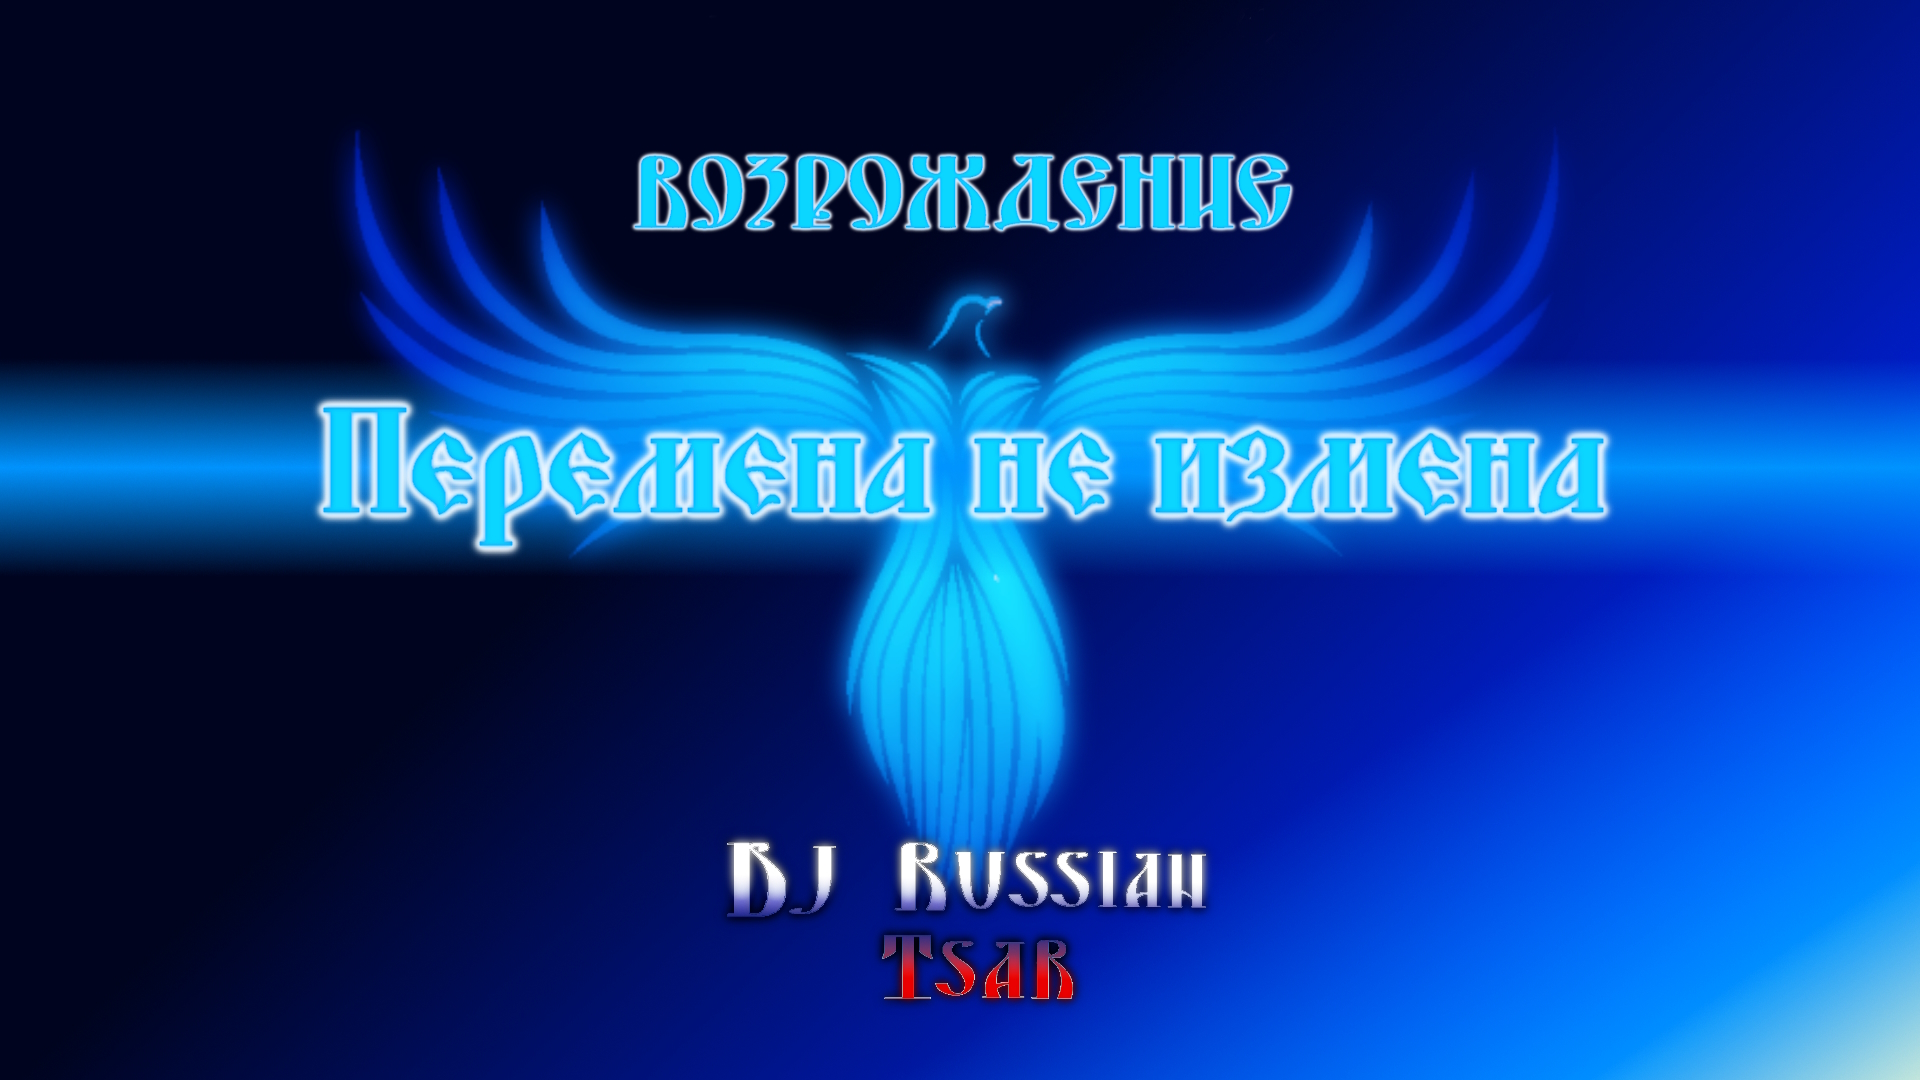 DJ Russian Tsar - Перемена не измена (Audio Official)